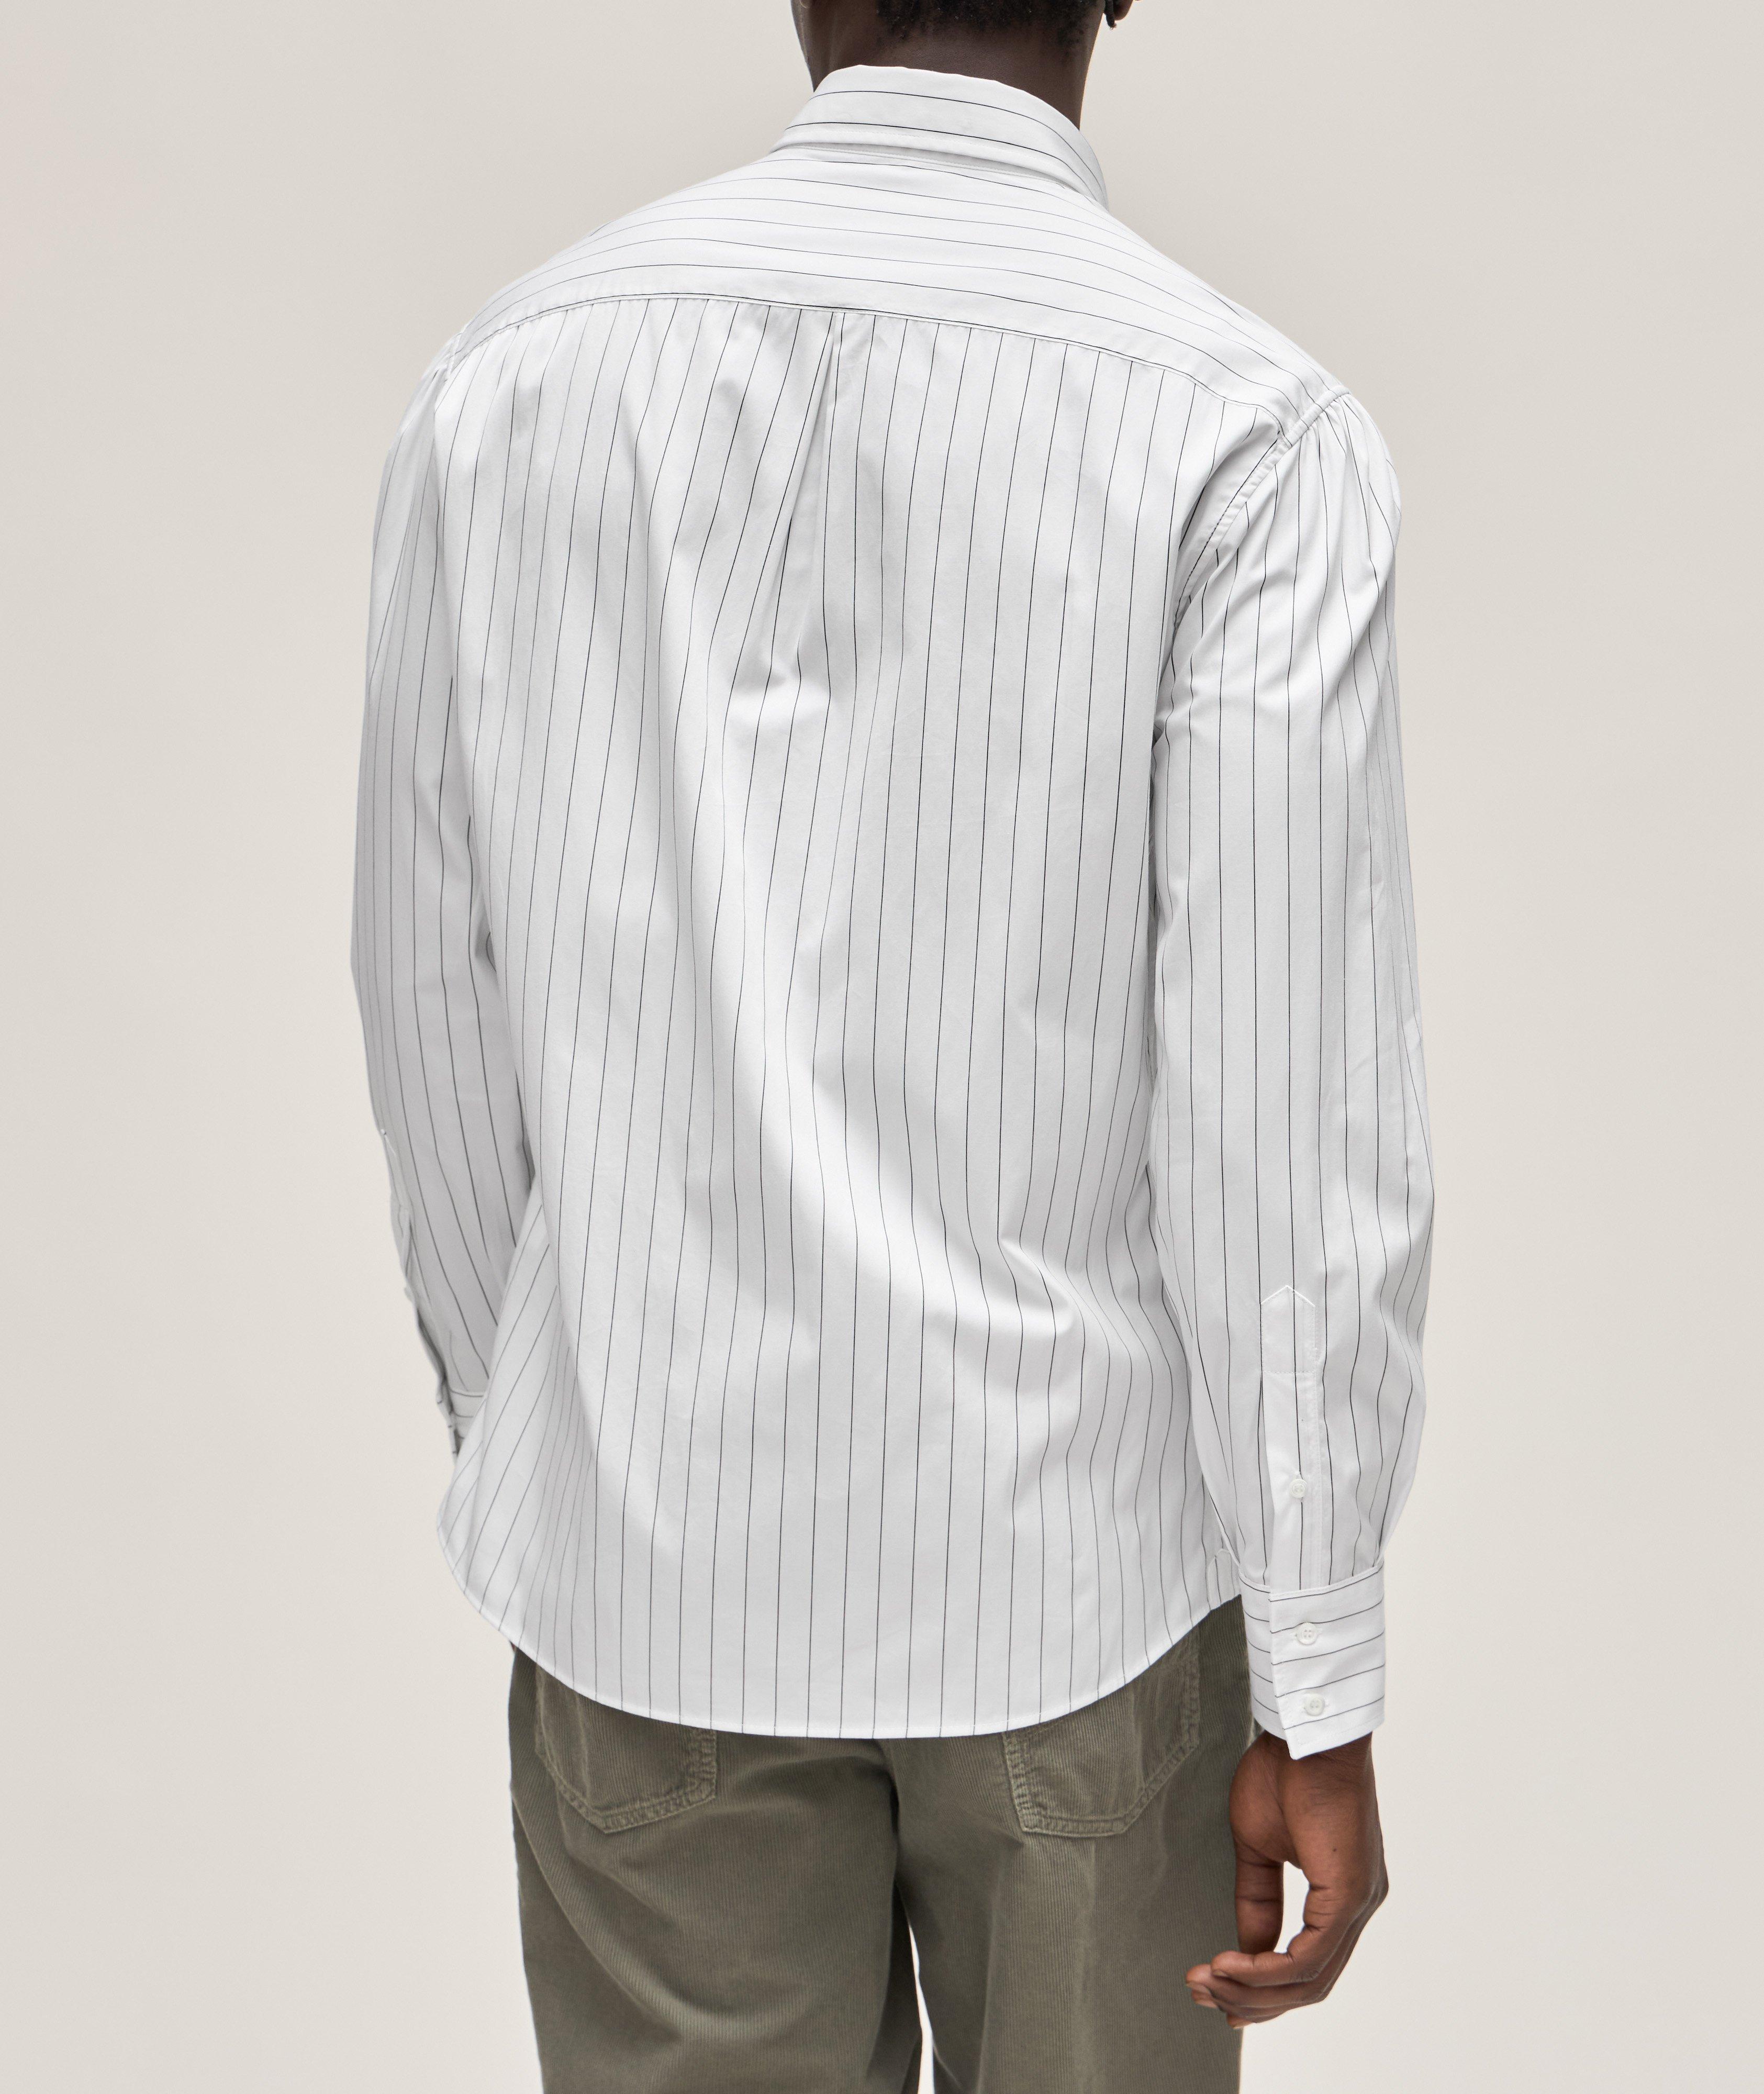 Basic Fit Striped Oxford Cotton Sport Shirt  image 2